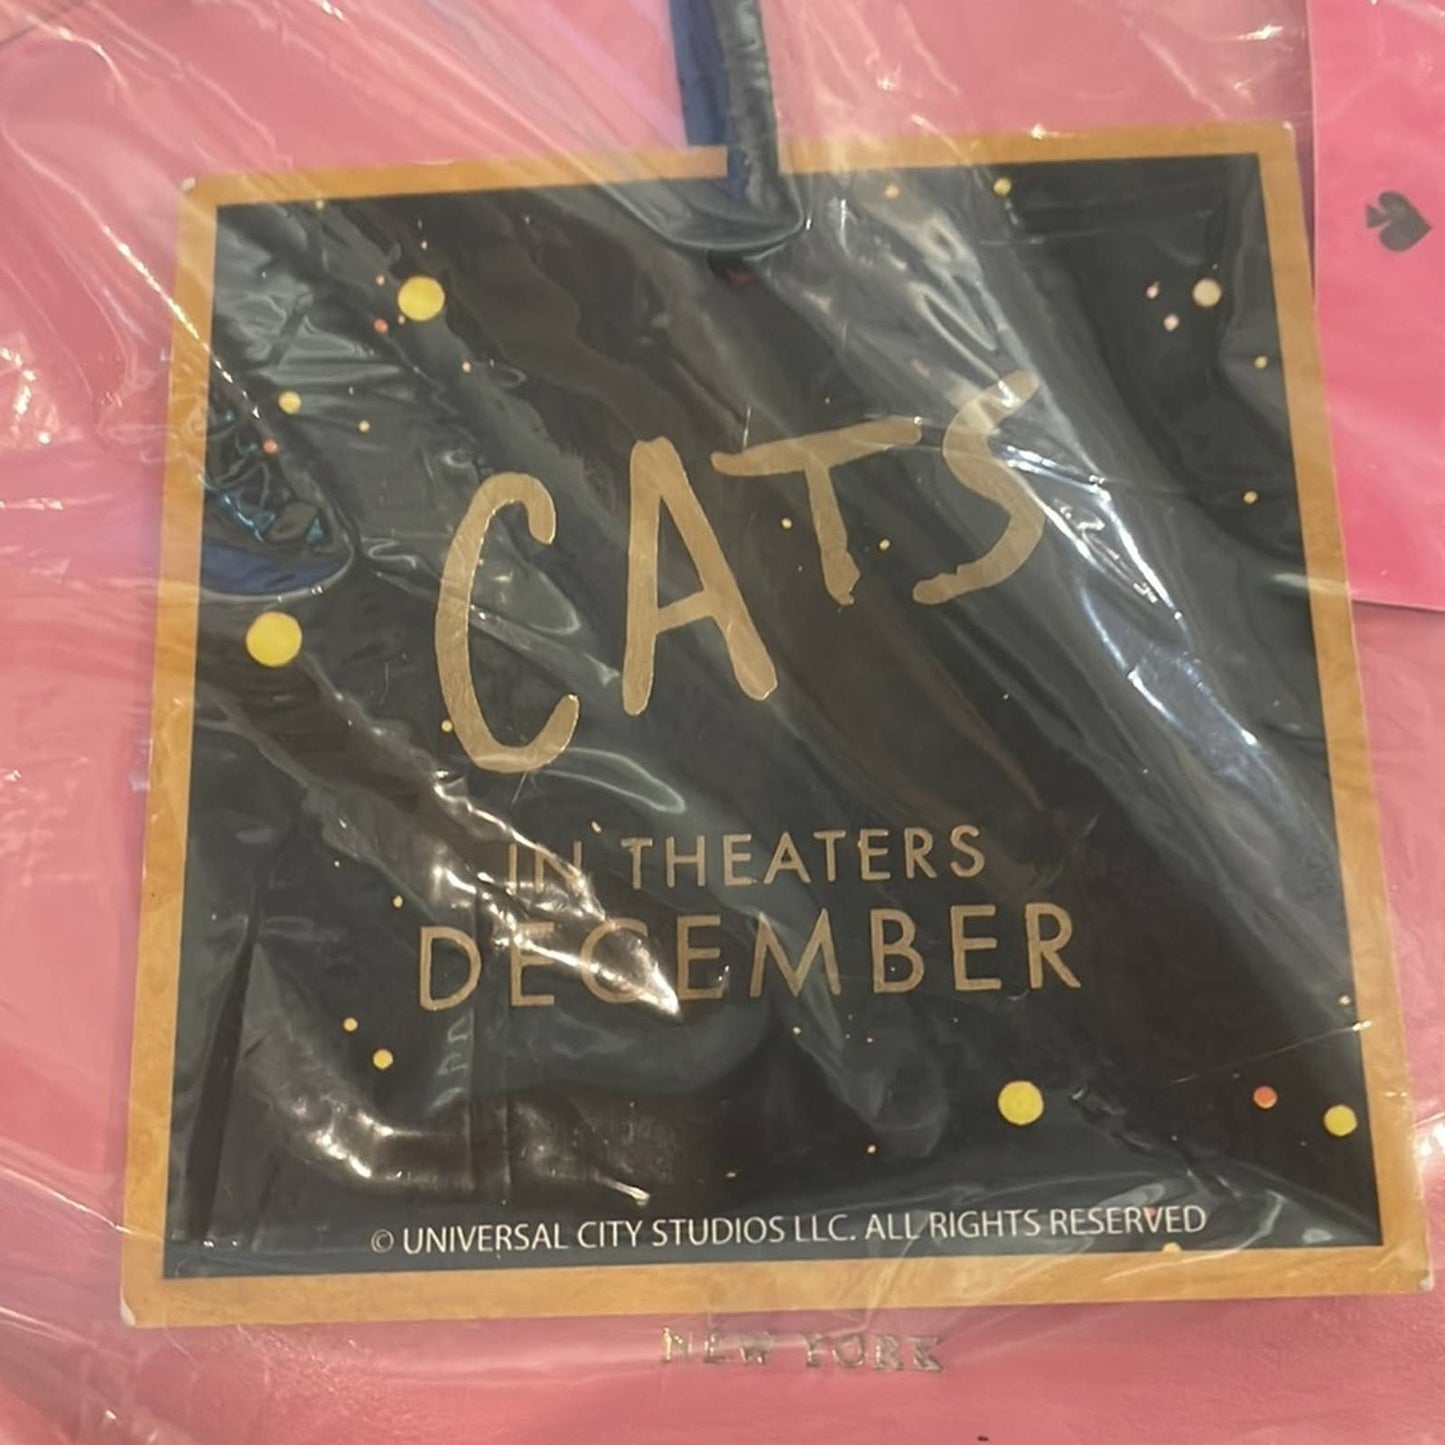 Kate Spade “Cats” Beight Pink Crossbody Bag w/ Gold Hardware